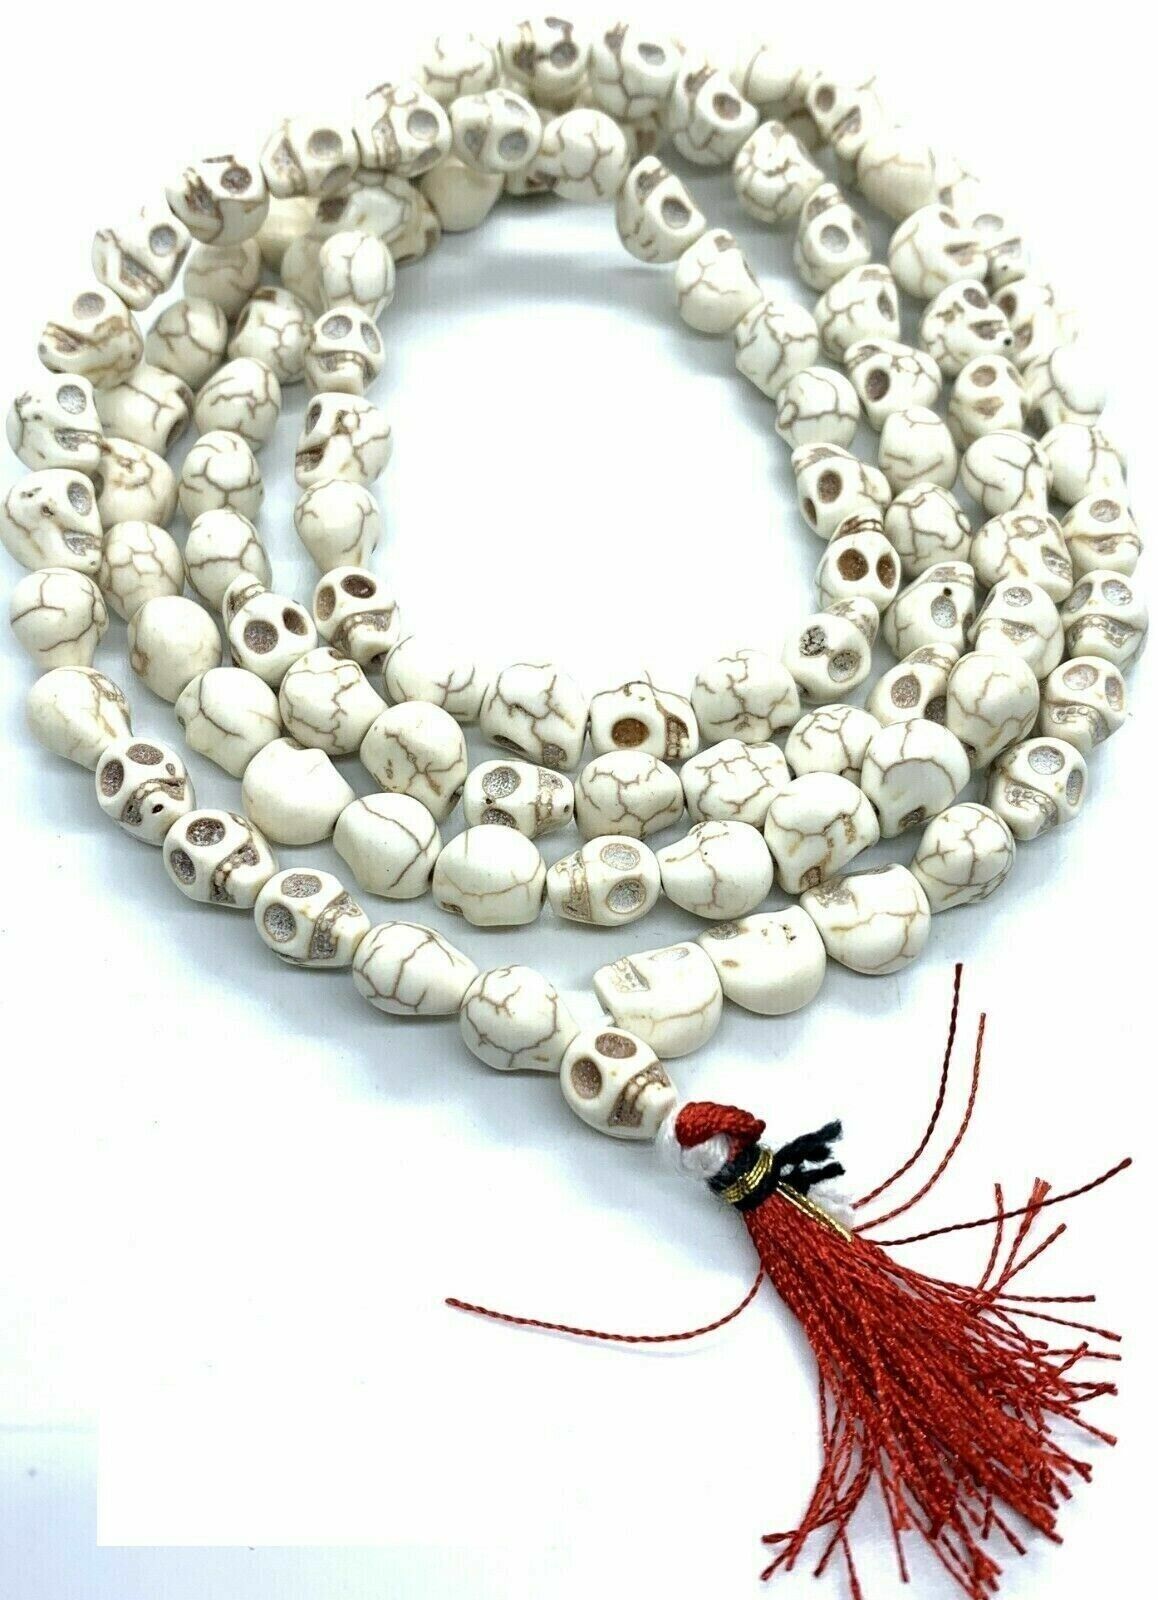 Tibetan Bone Skull Buddhist Prayer Beads Mala Necklace Prayer Kali Bead